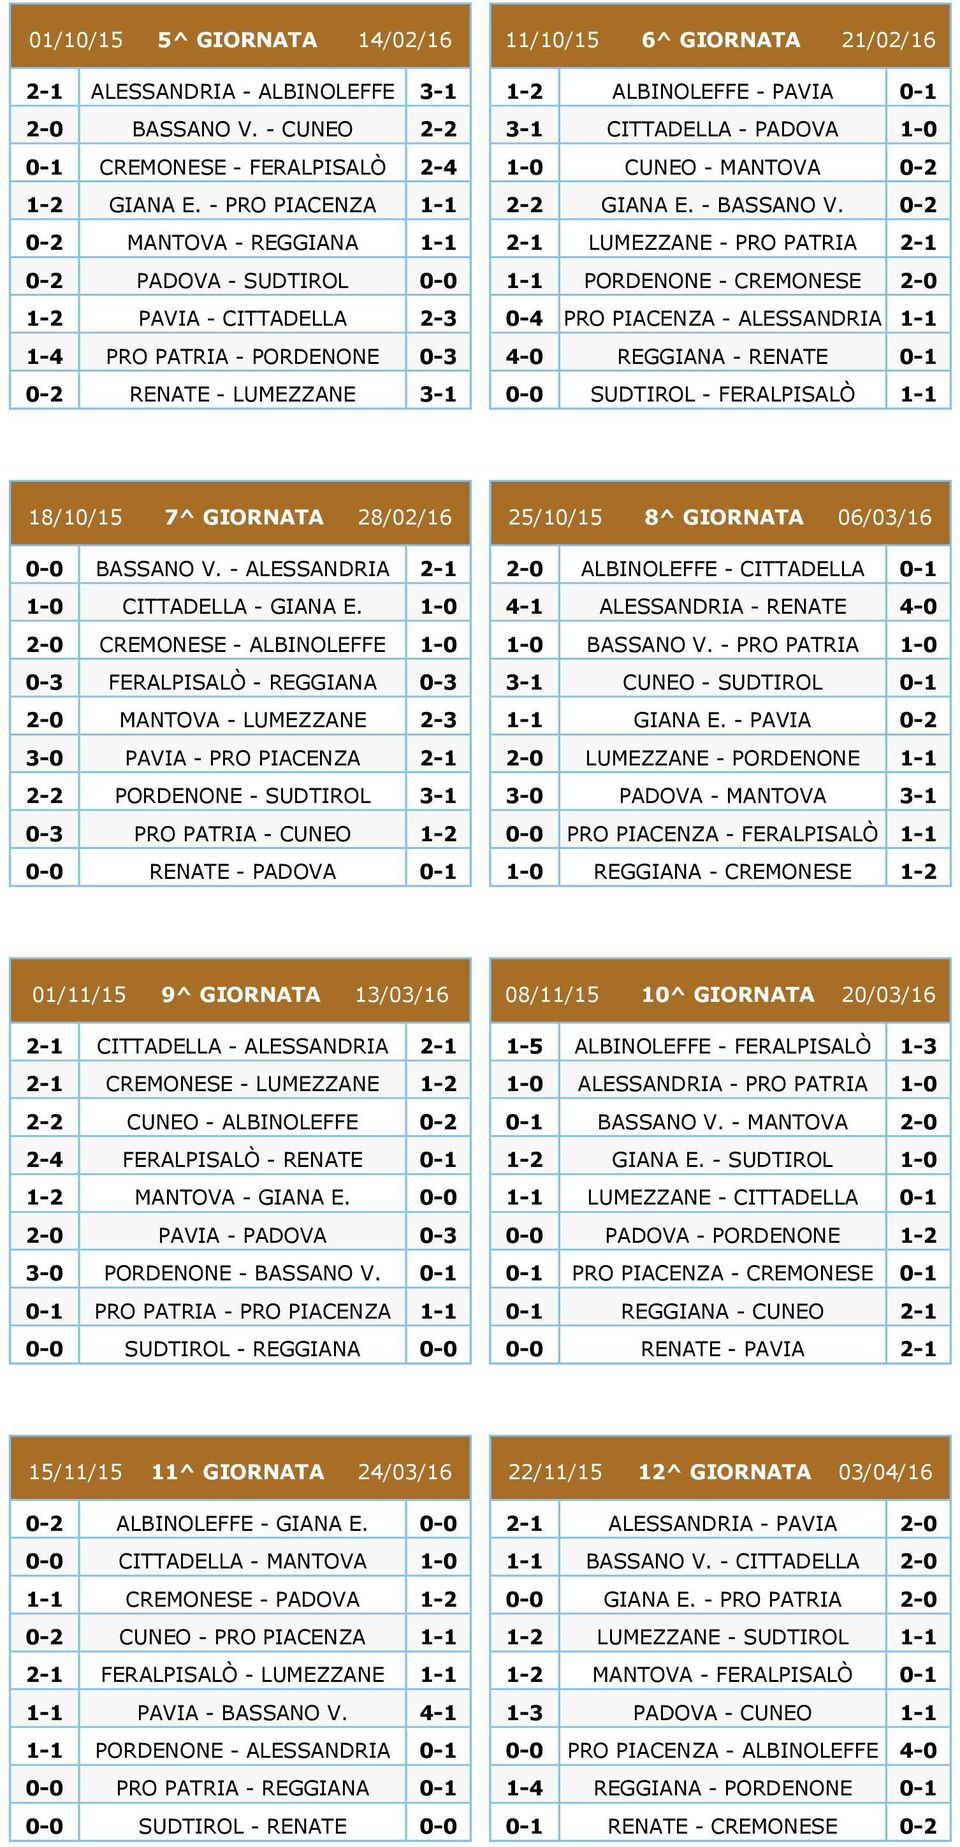 ALBINOLEFFE - PAVIA 0-1 3-1 CITTADELLA - PADOVA 1-0 1-0 CUNEO - MANTOVA 0-2 2-2 GIANA E. - BASSANO V.